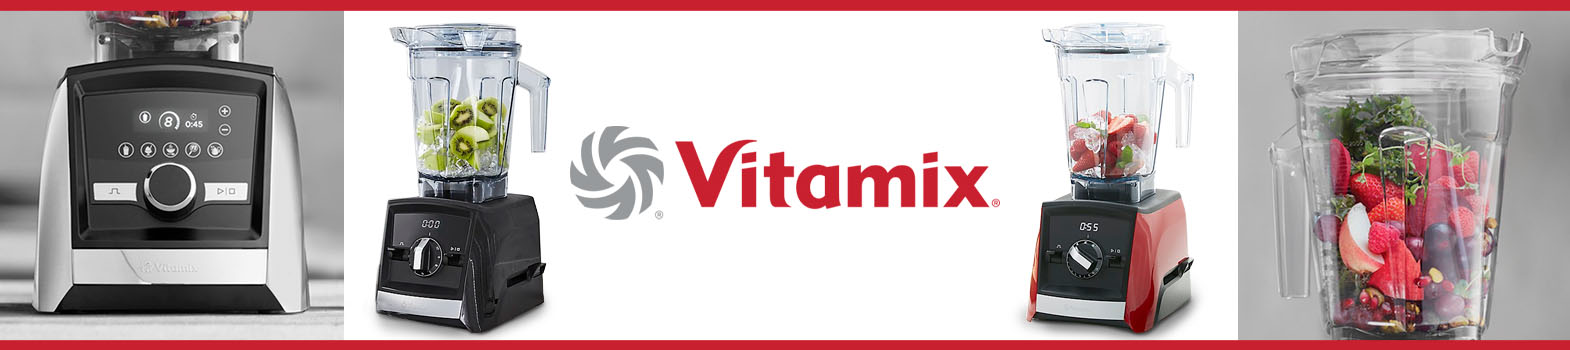 Vitamix High Performance Blenders